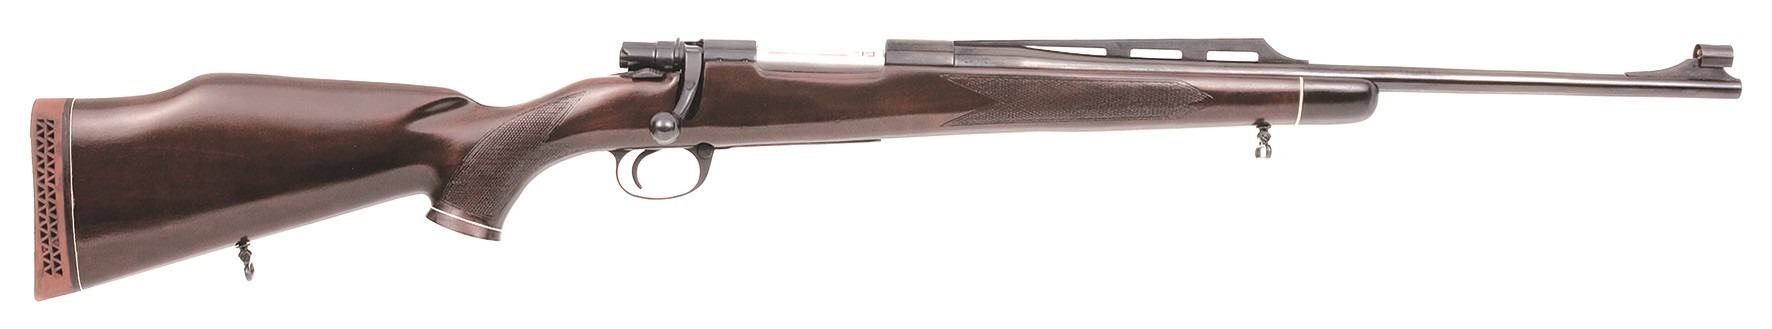 Zastava M70 Battue sporting rifle